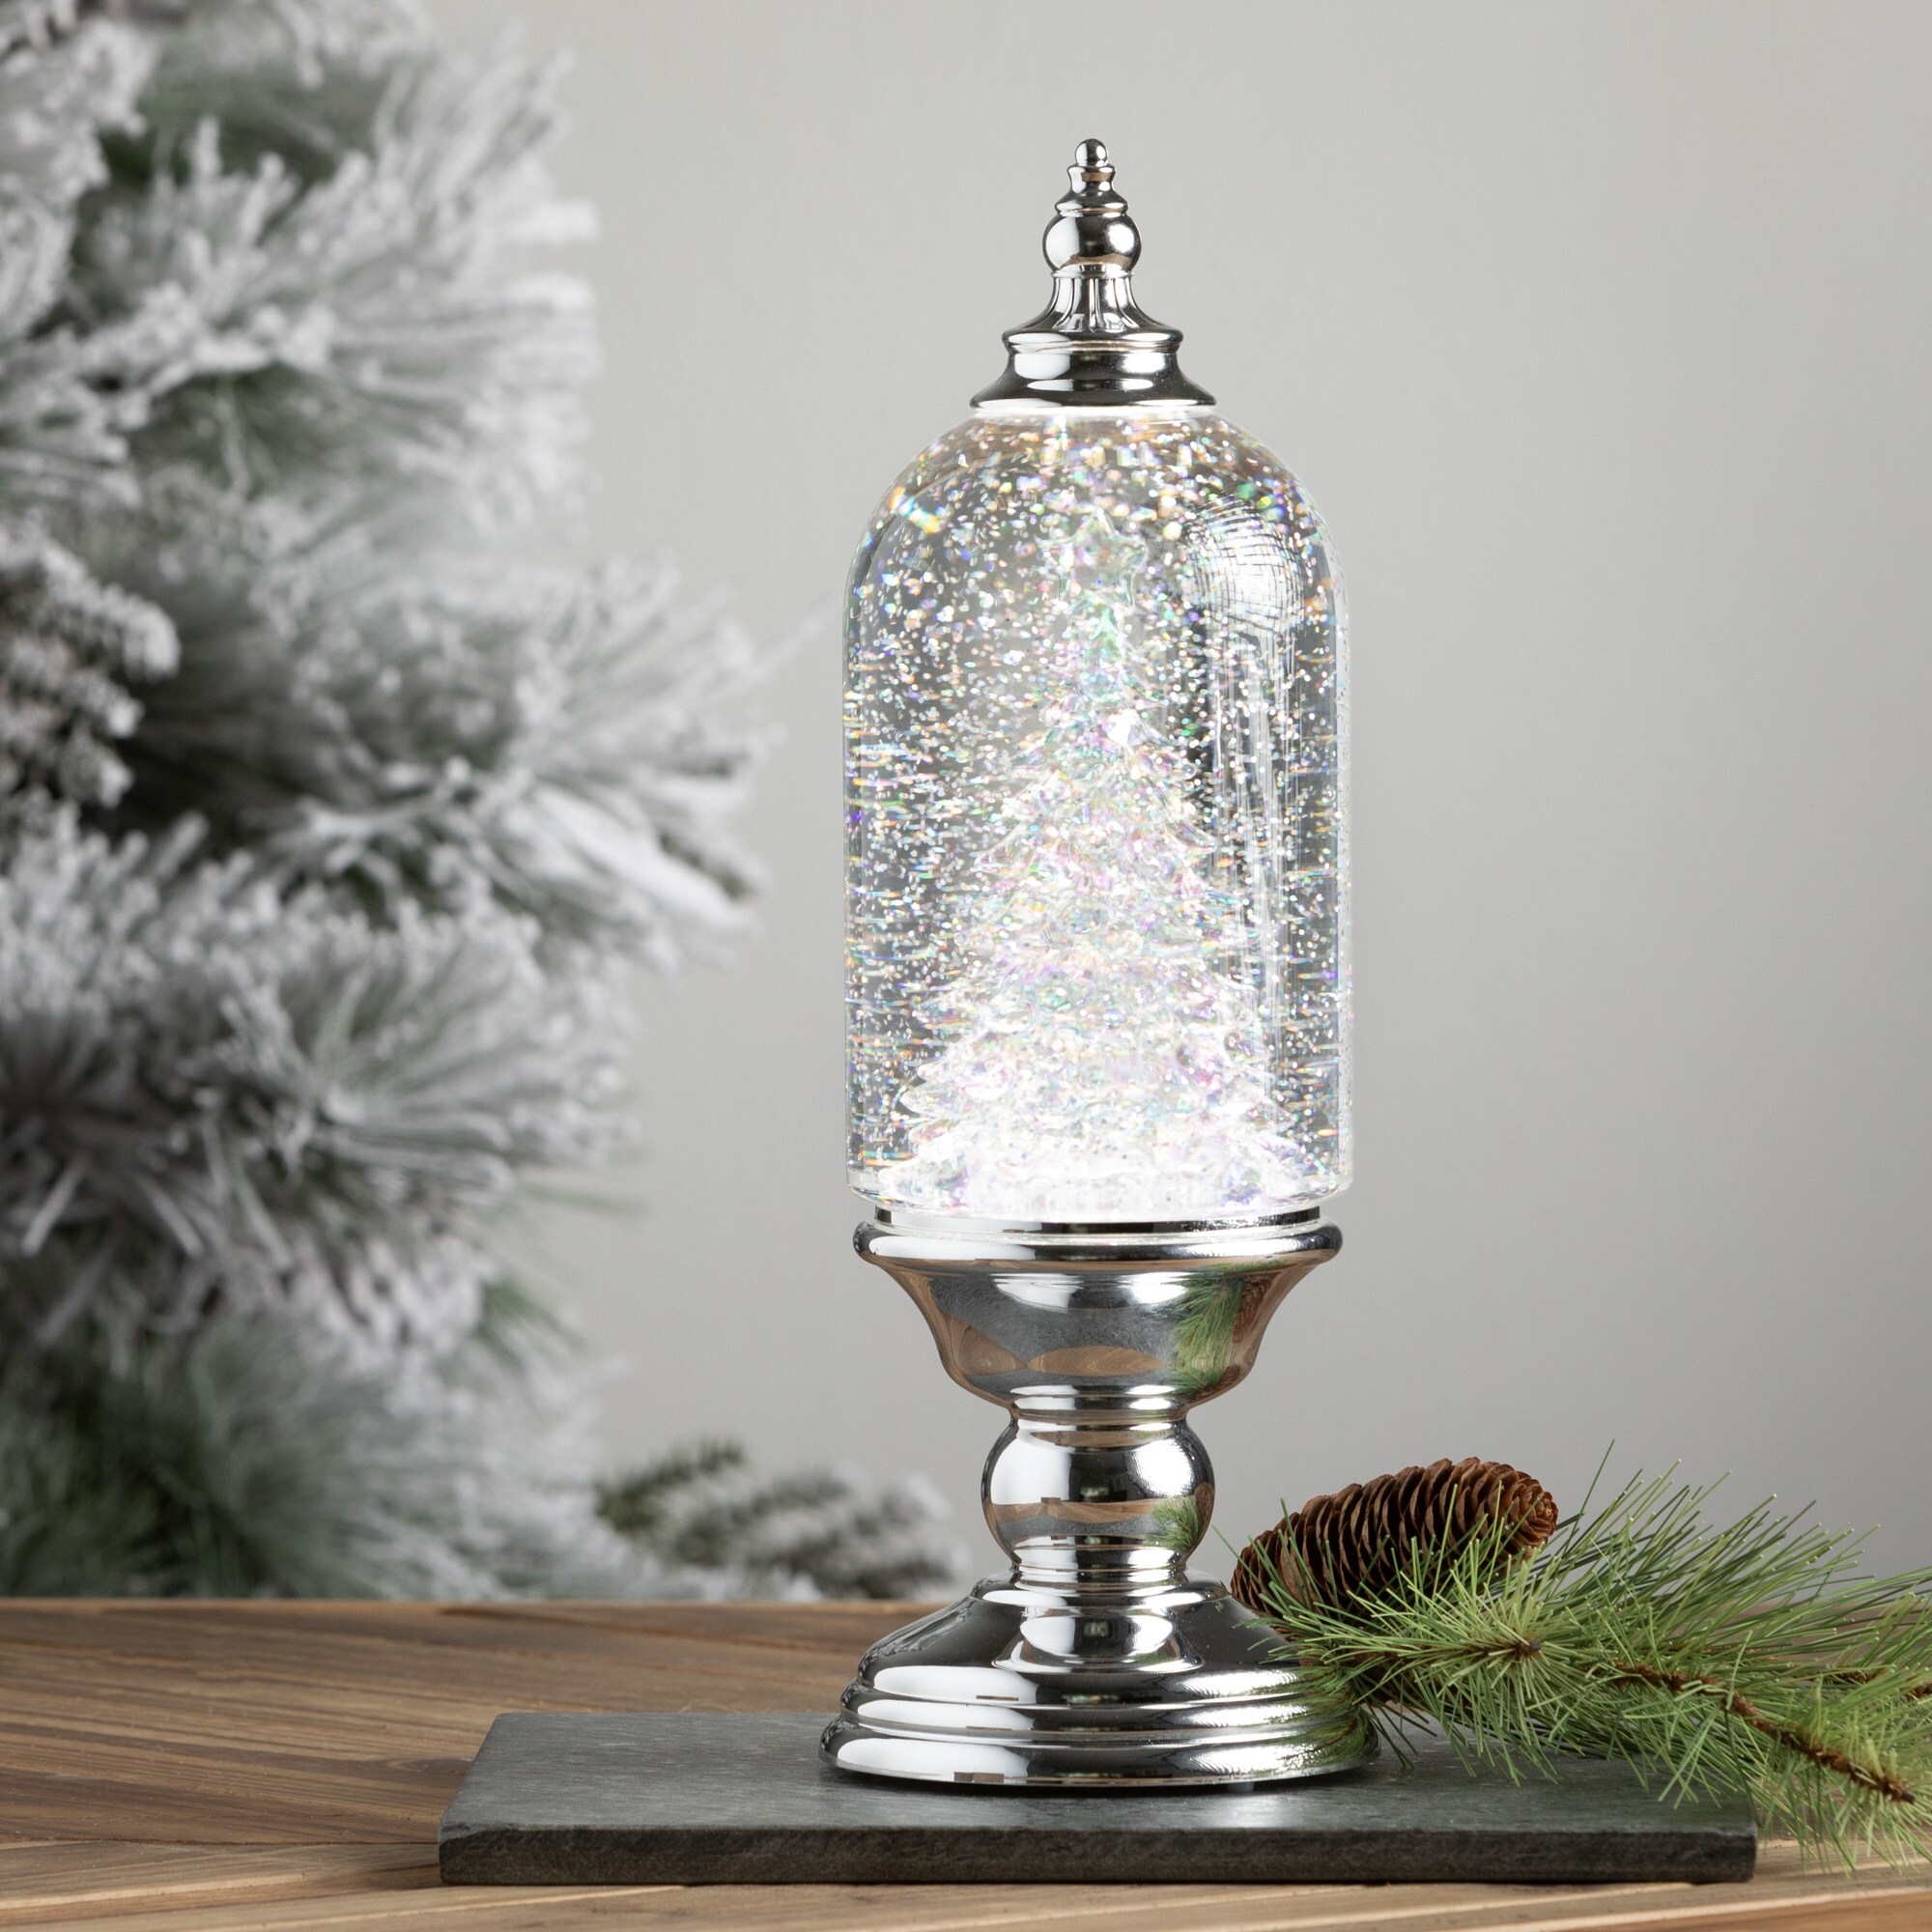 13"H Sullivans Lighted Tree Shimmer Globe, Christmas Decor, Silver - 4.25"L x 4.25"W x 13"H